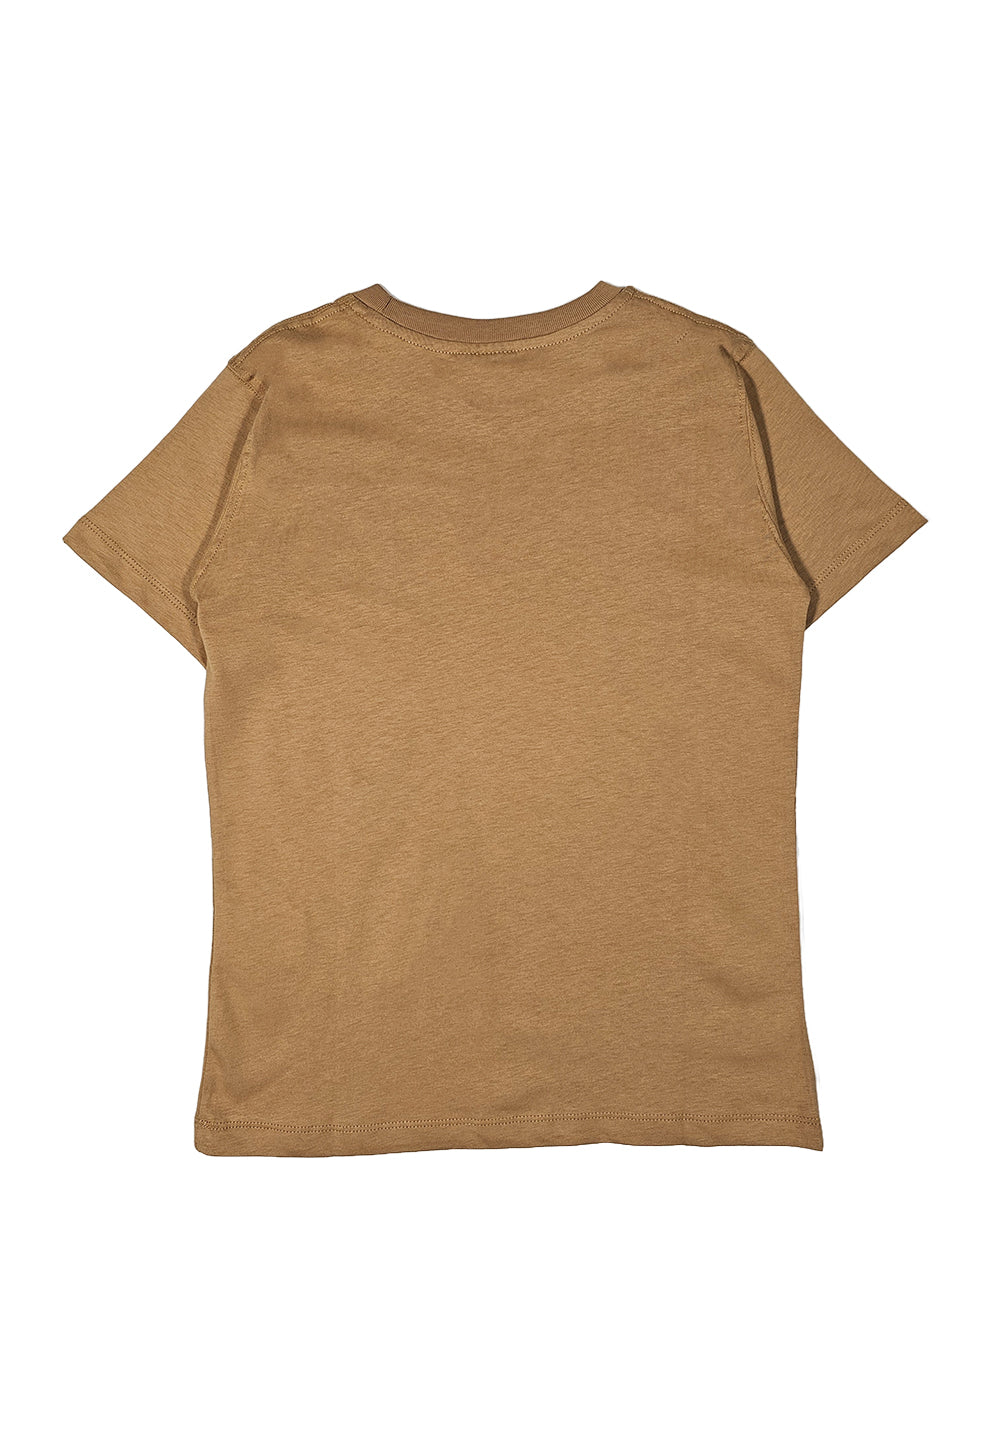 T-shirt marrone per bambino